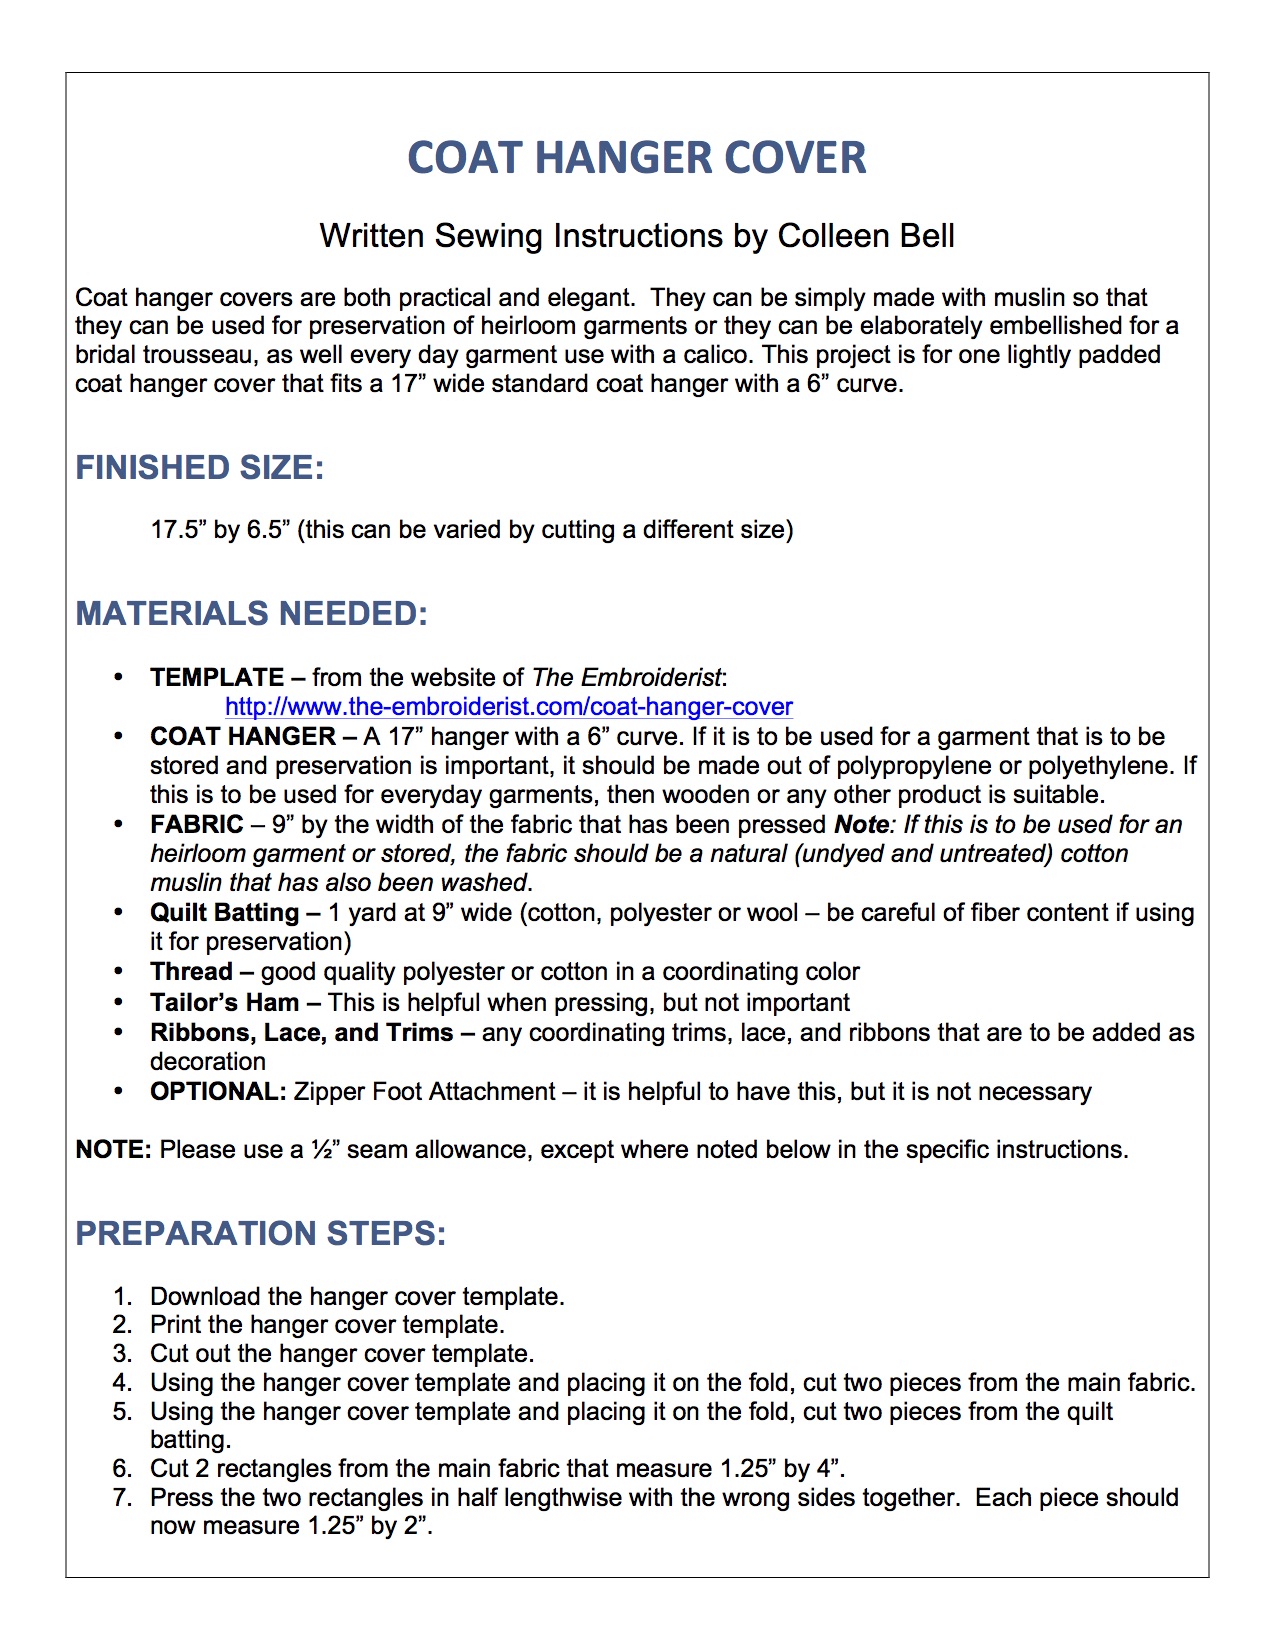 Coat Hanger Cover Written Instructions